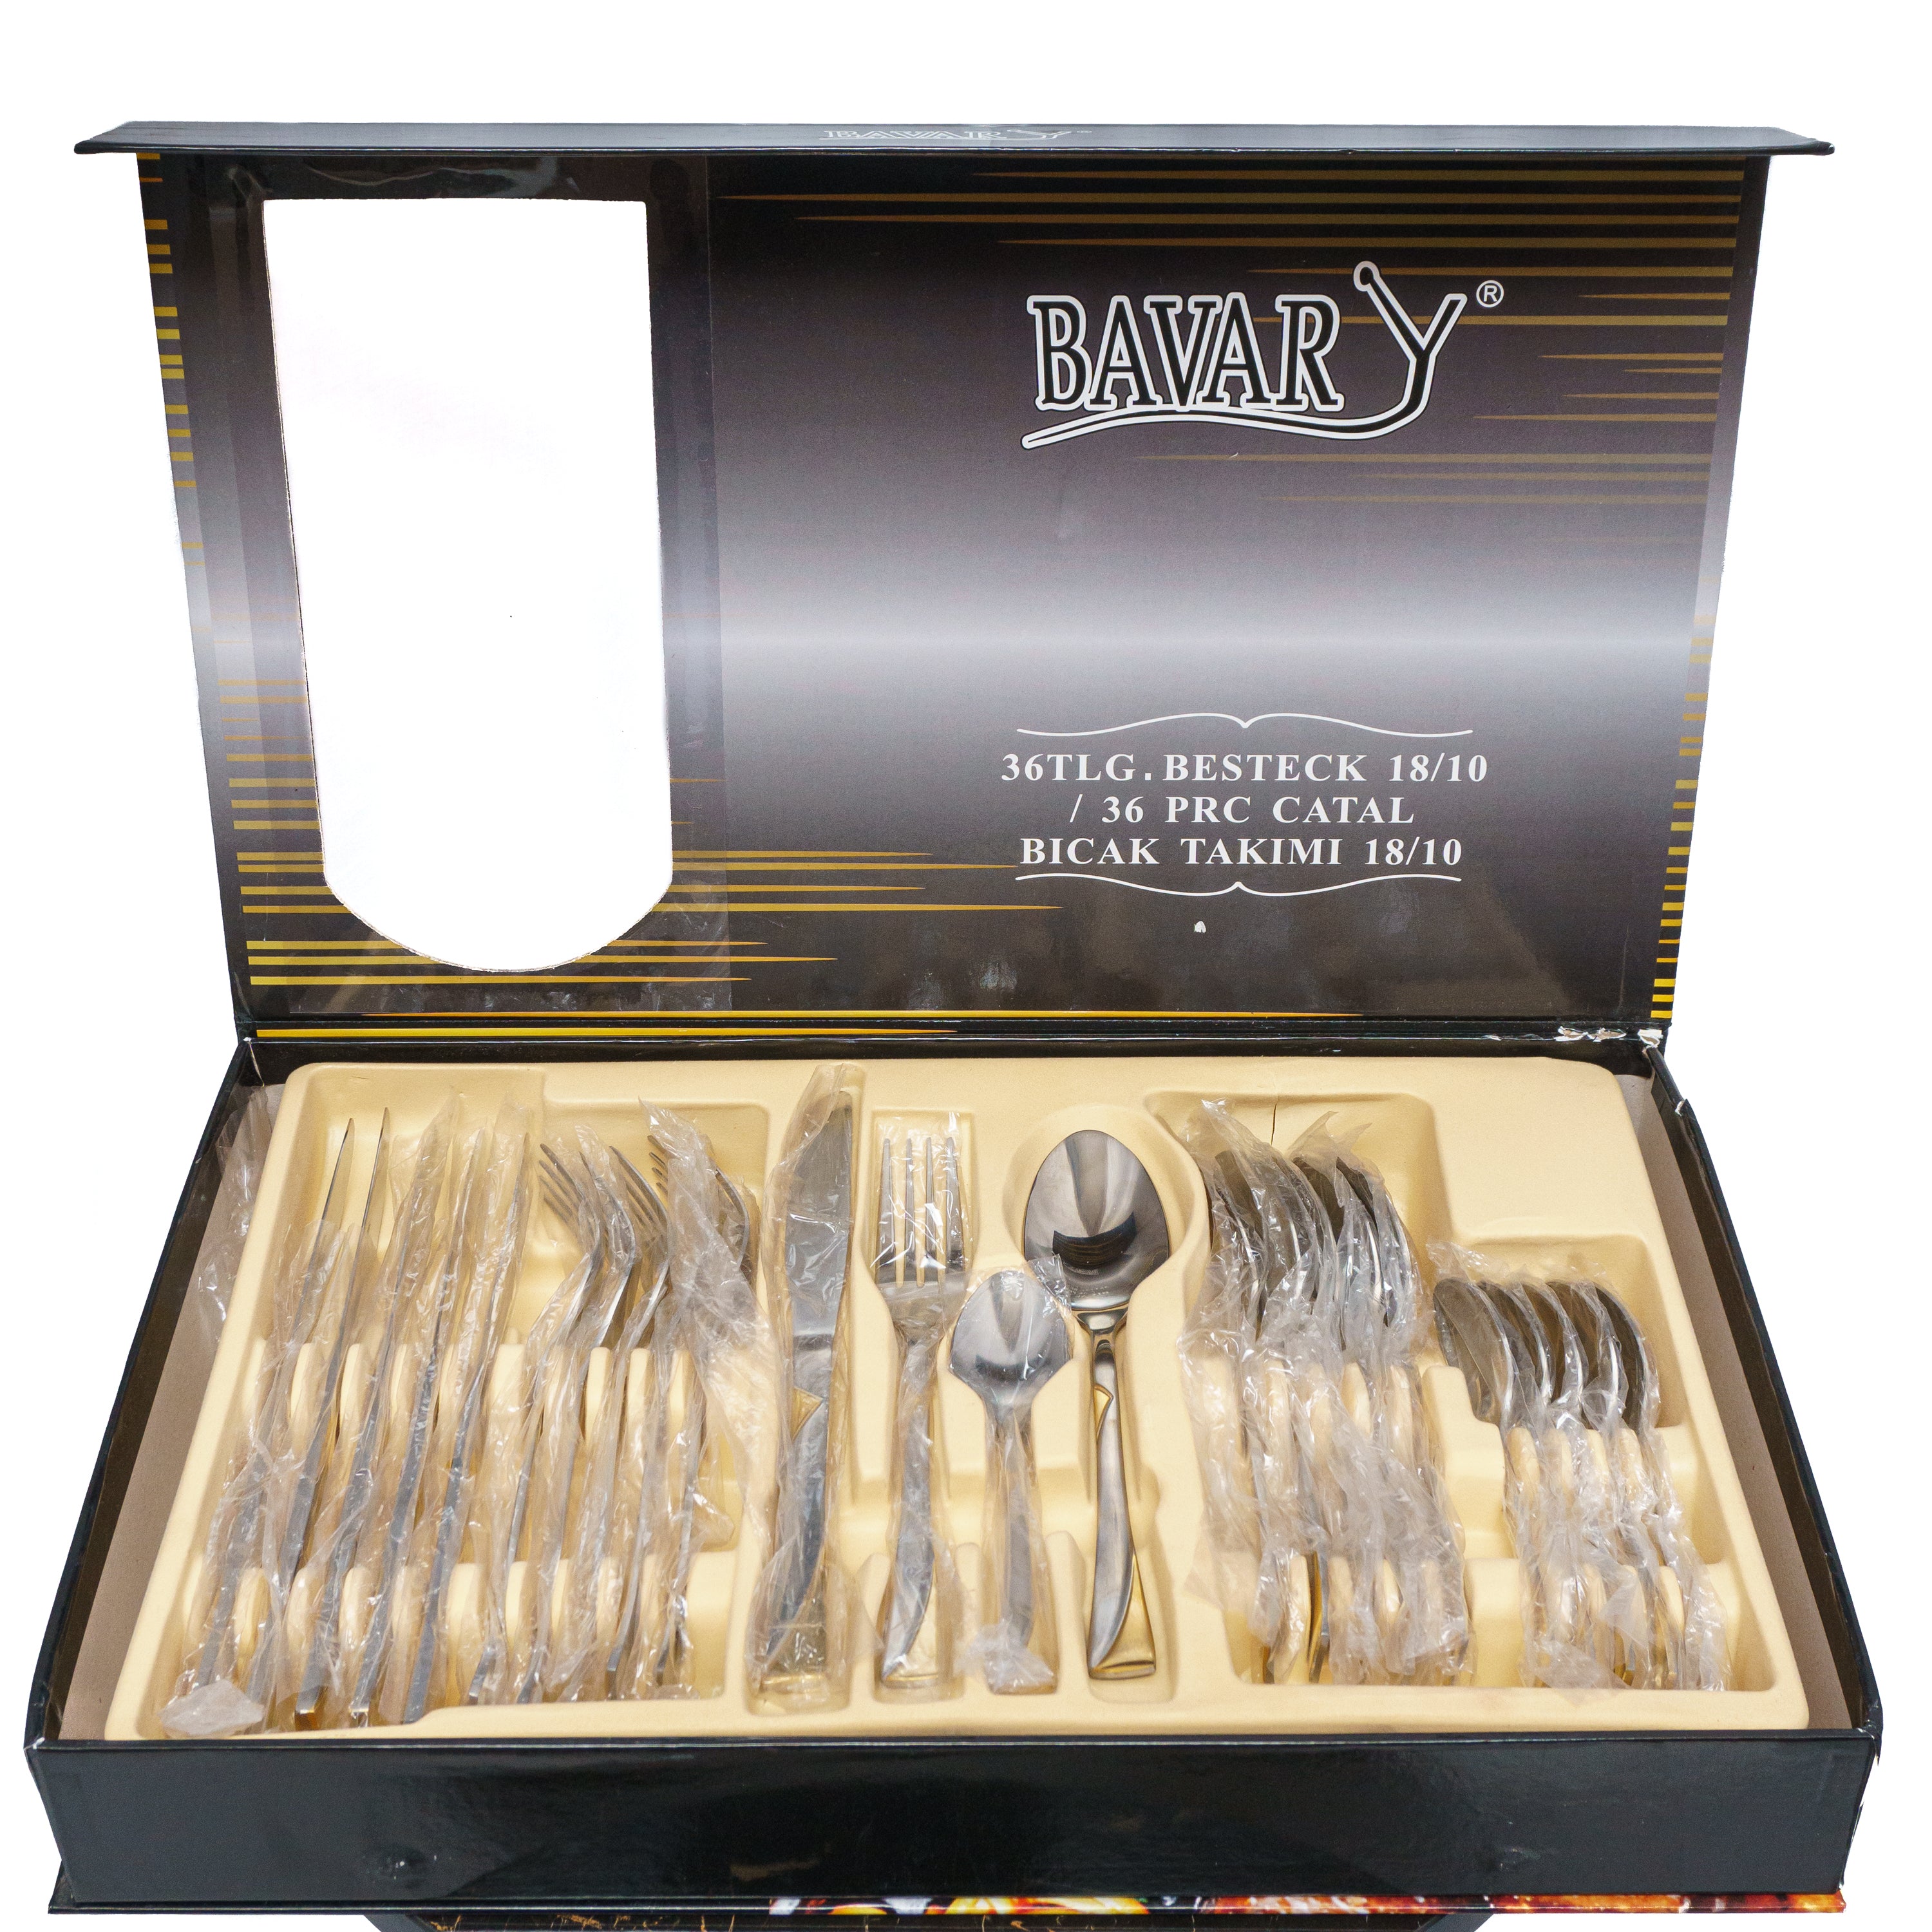 Bavar Y Cutlery Set - 36pcs: Spoons, Forks, and Teaspoons